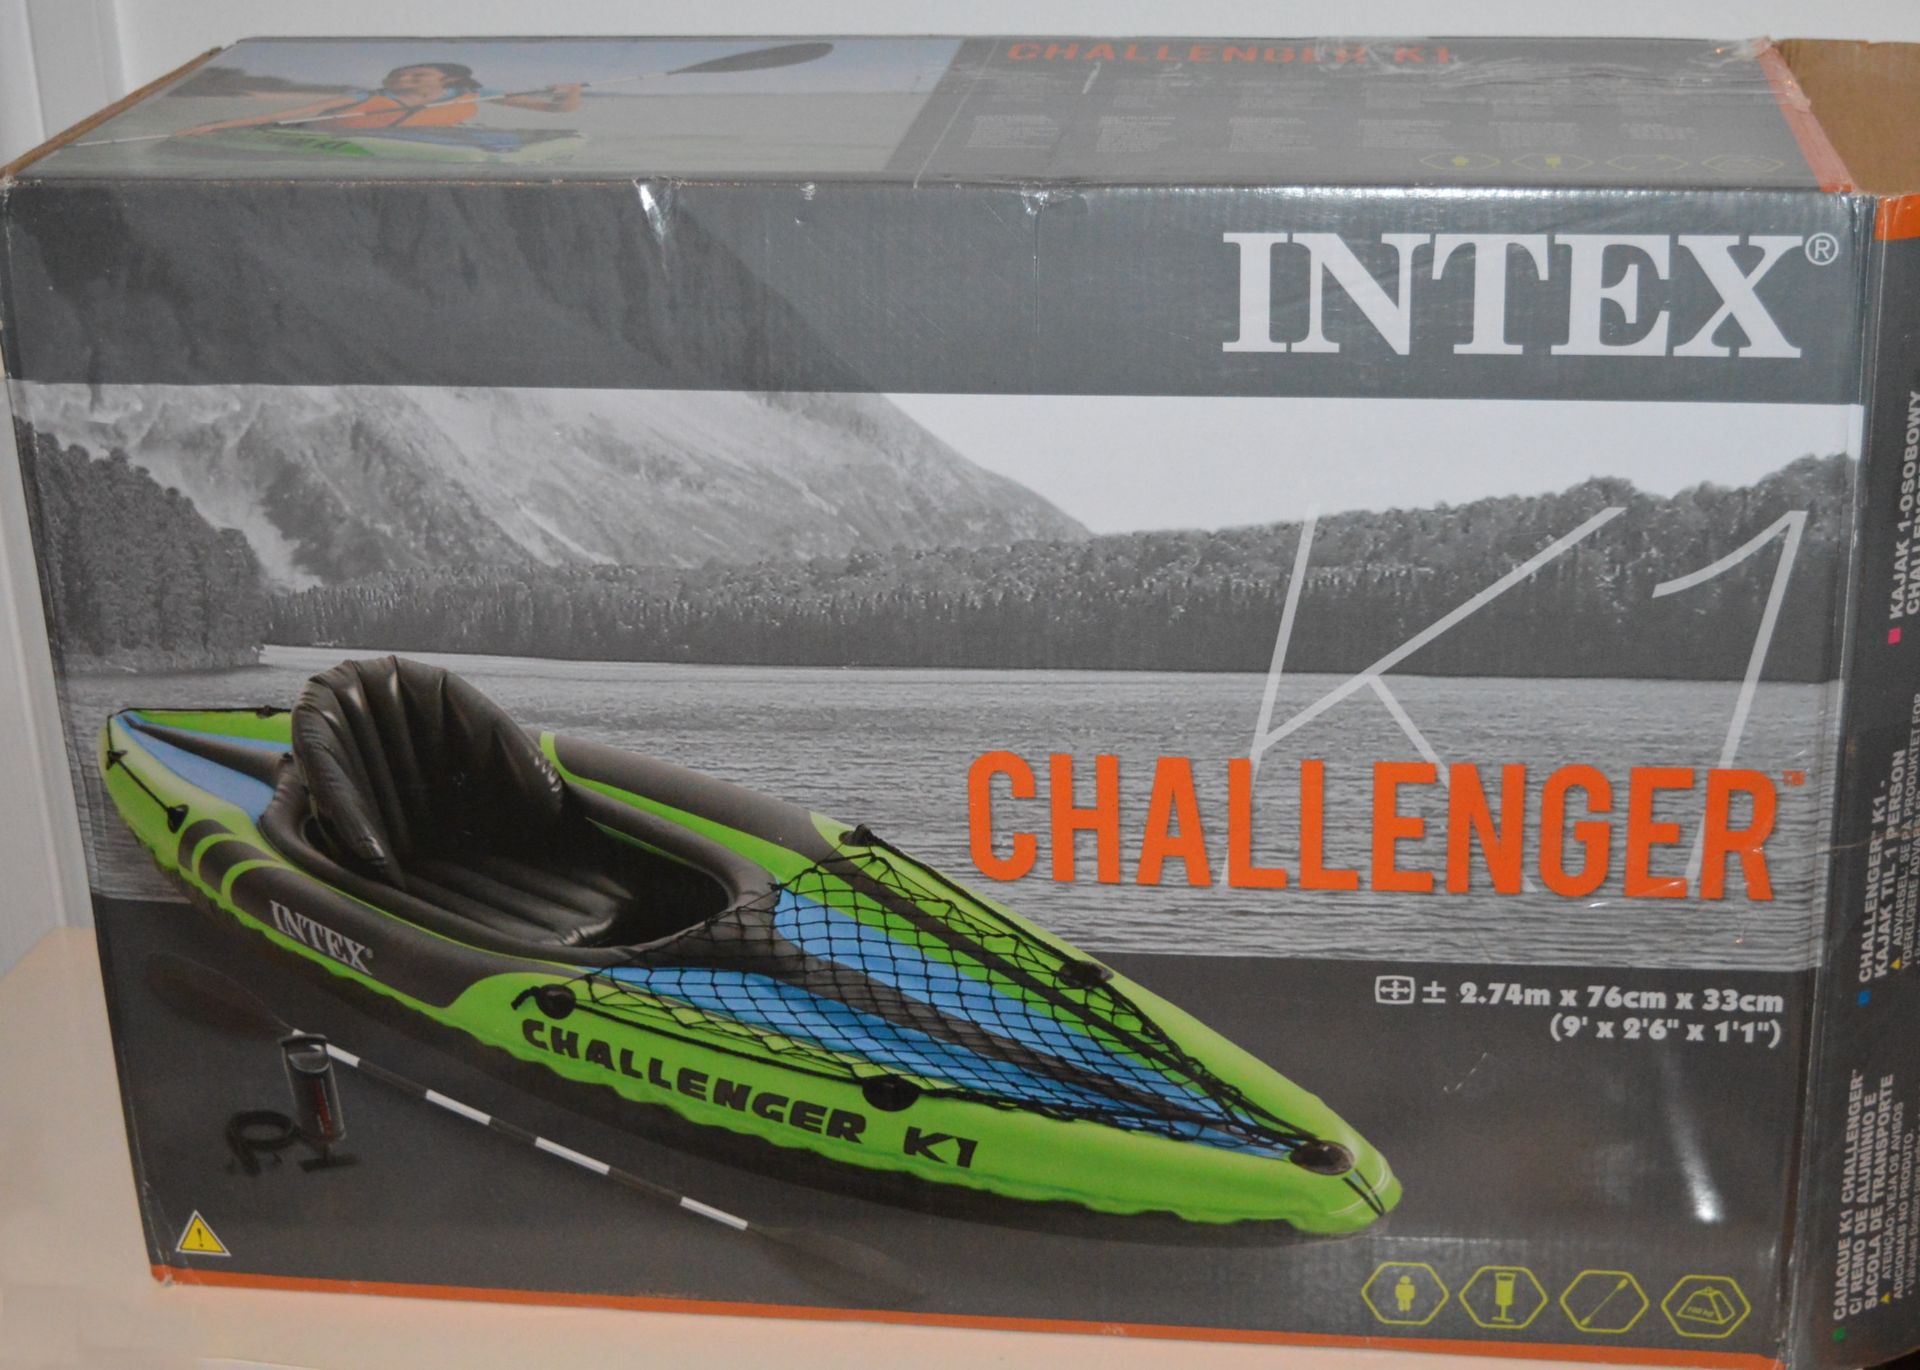 1 x Intex Challenger K1 Kayak Boat Set - Super Tough PVC Material - Includes Aluminum Paddle - - Image 3 of 3